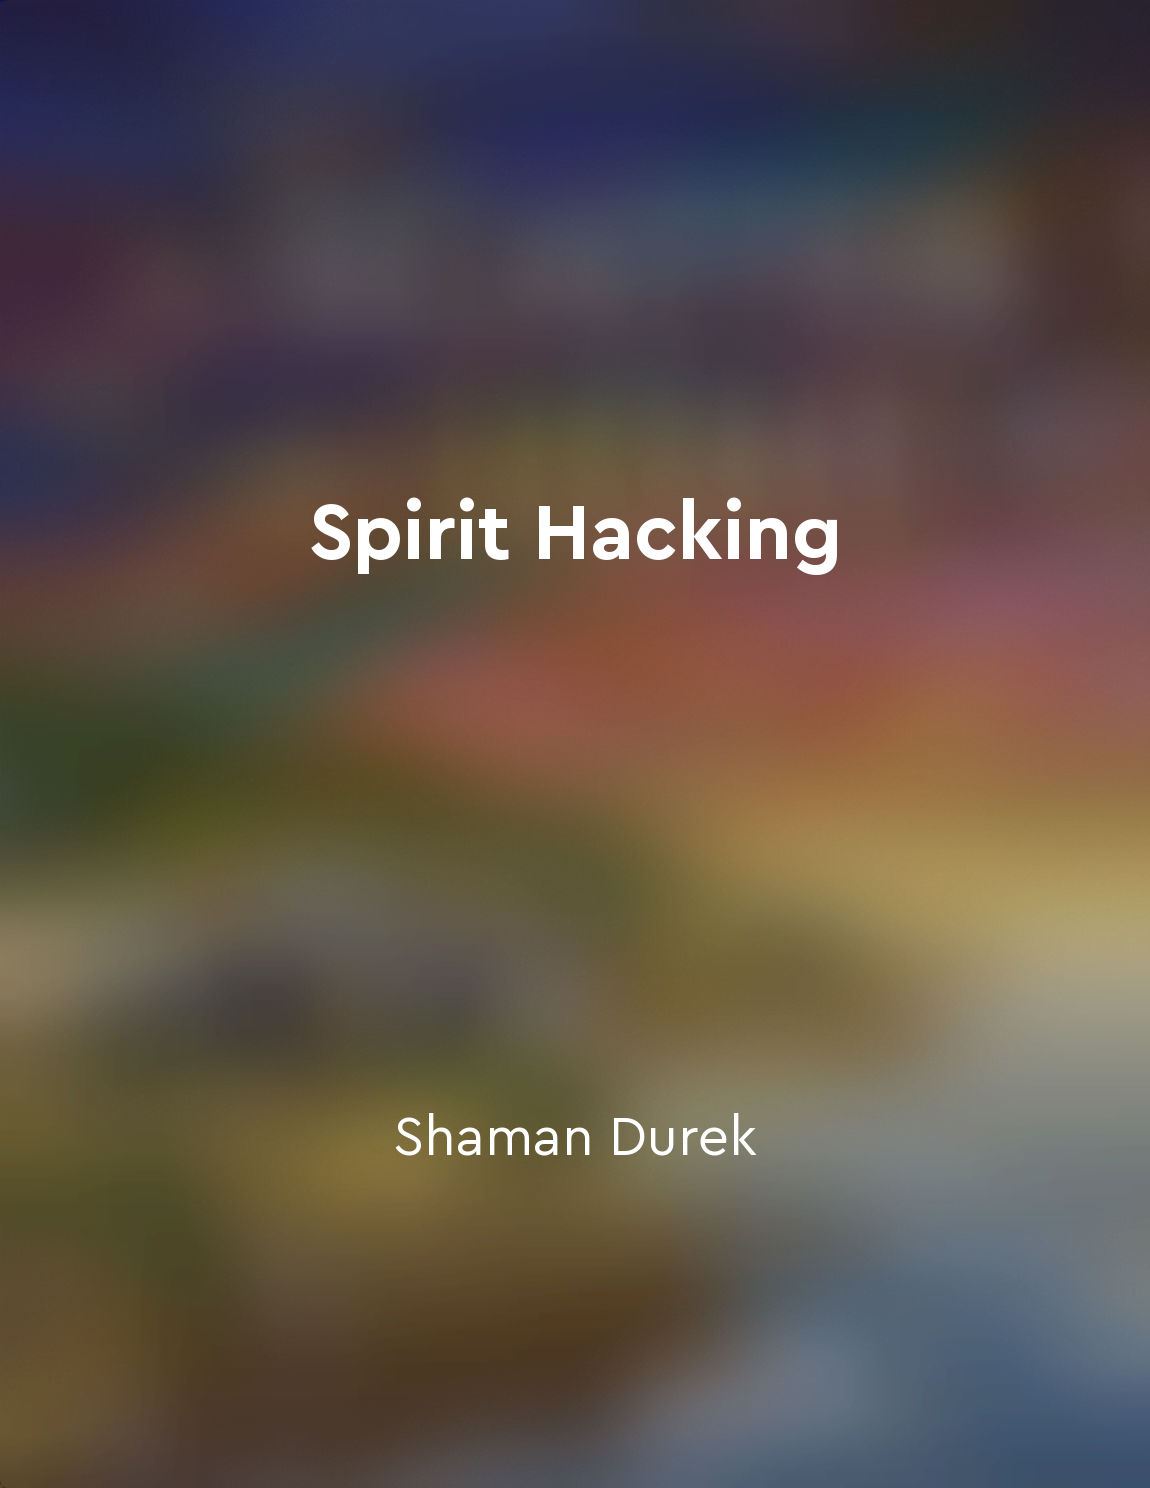 Spirit hacking involves understanding and manipulating energy